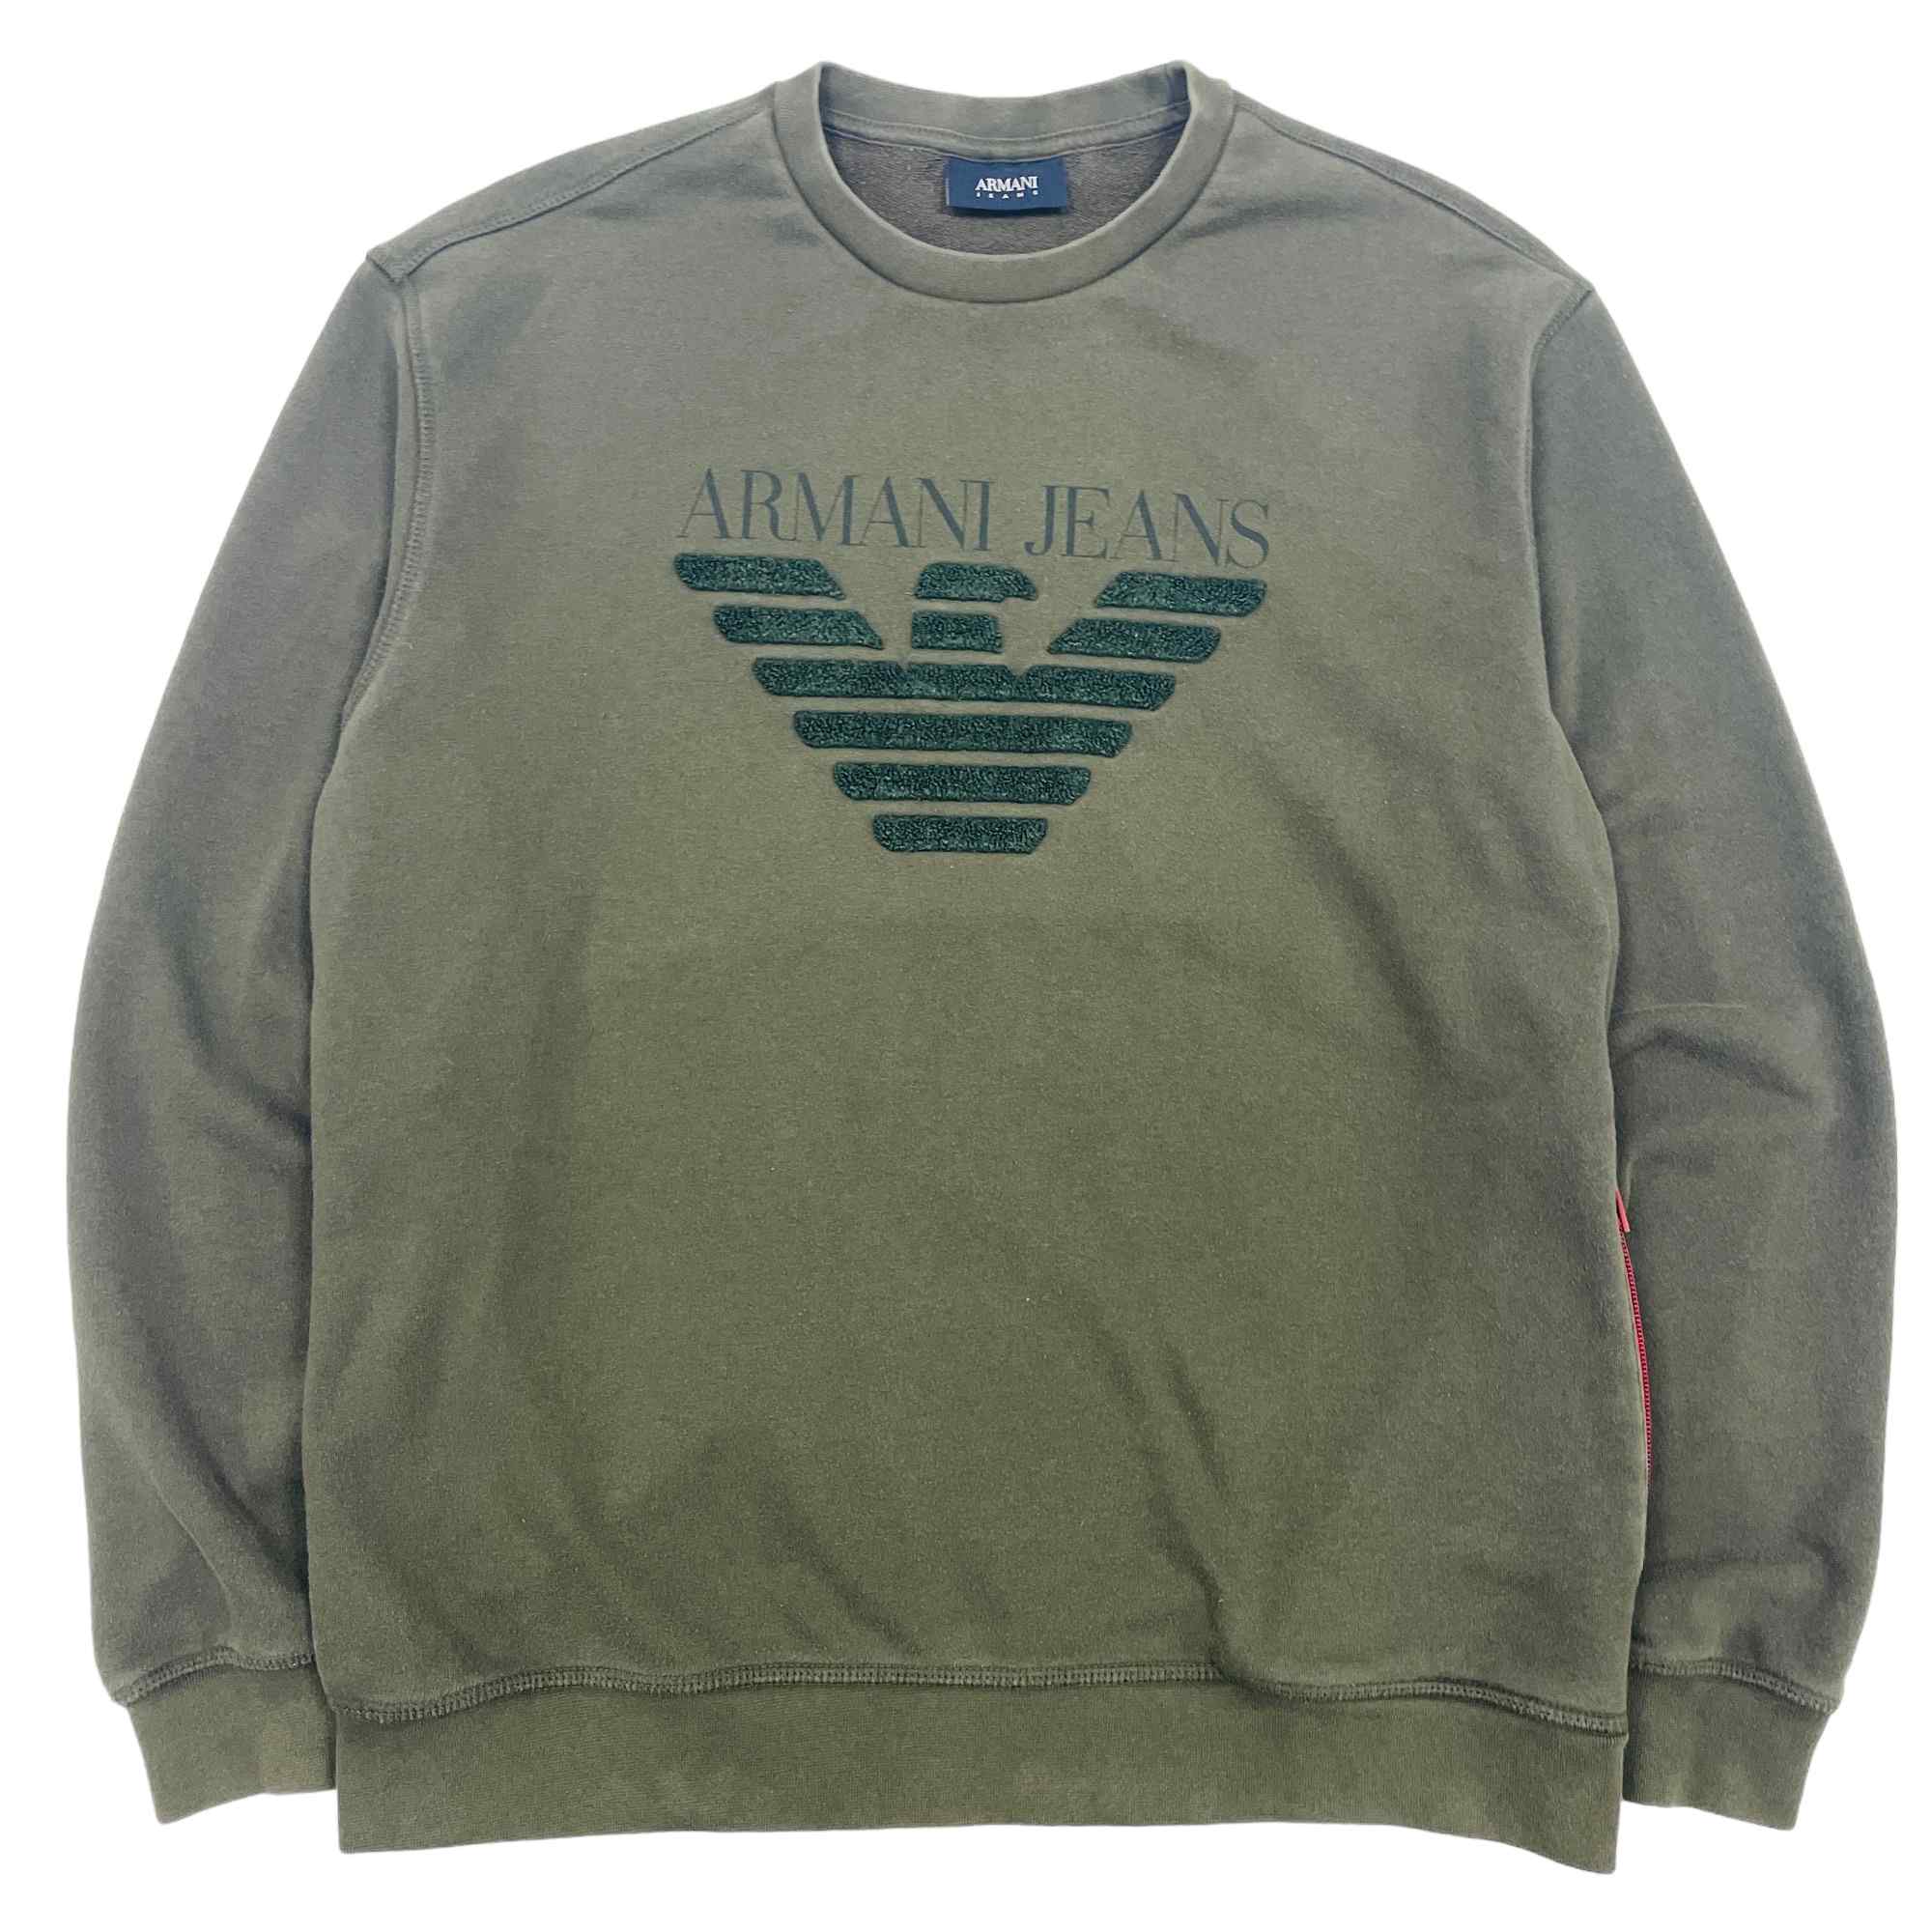 Armani Jeans Sweatshirt With Raised Large Logo Design - Large